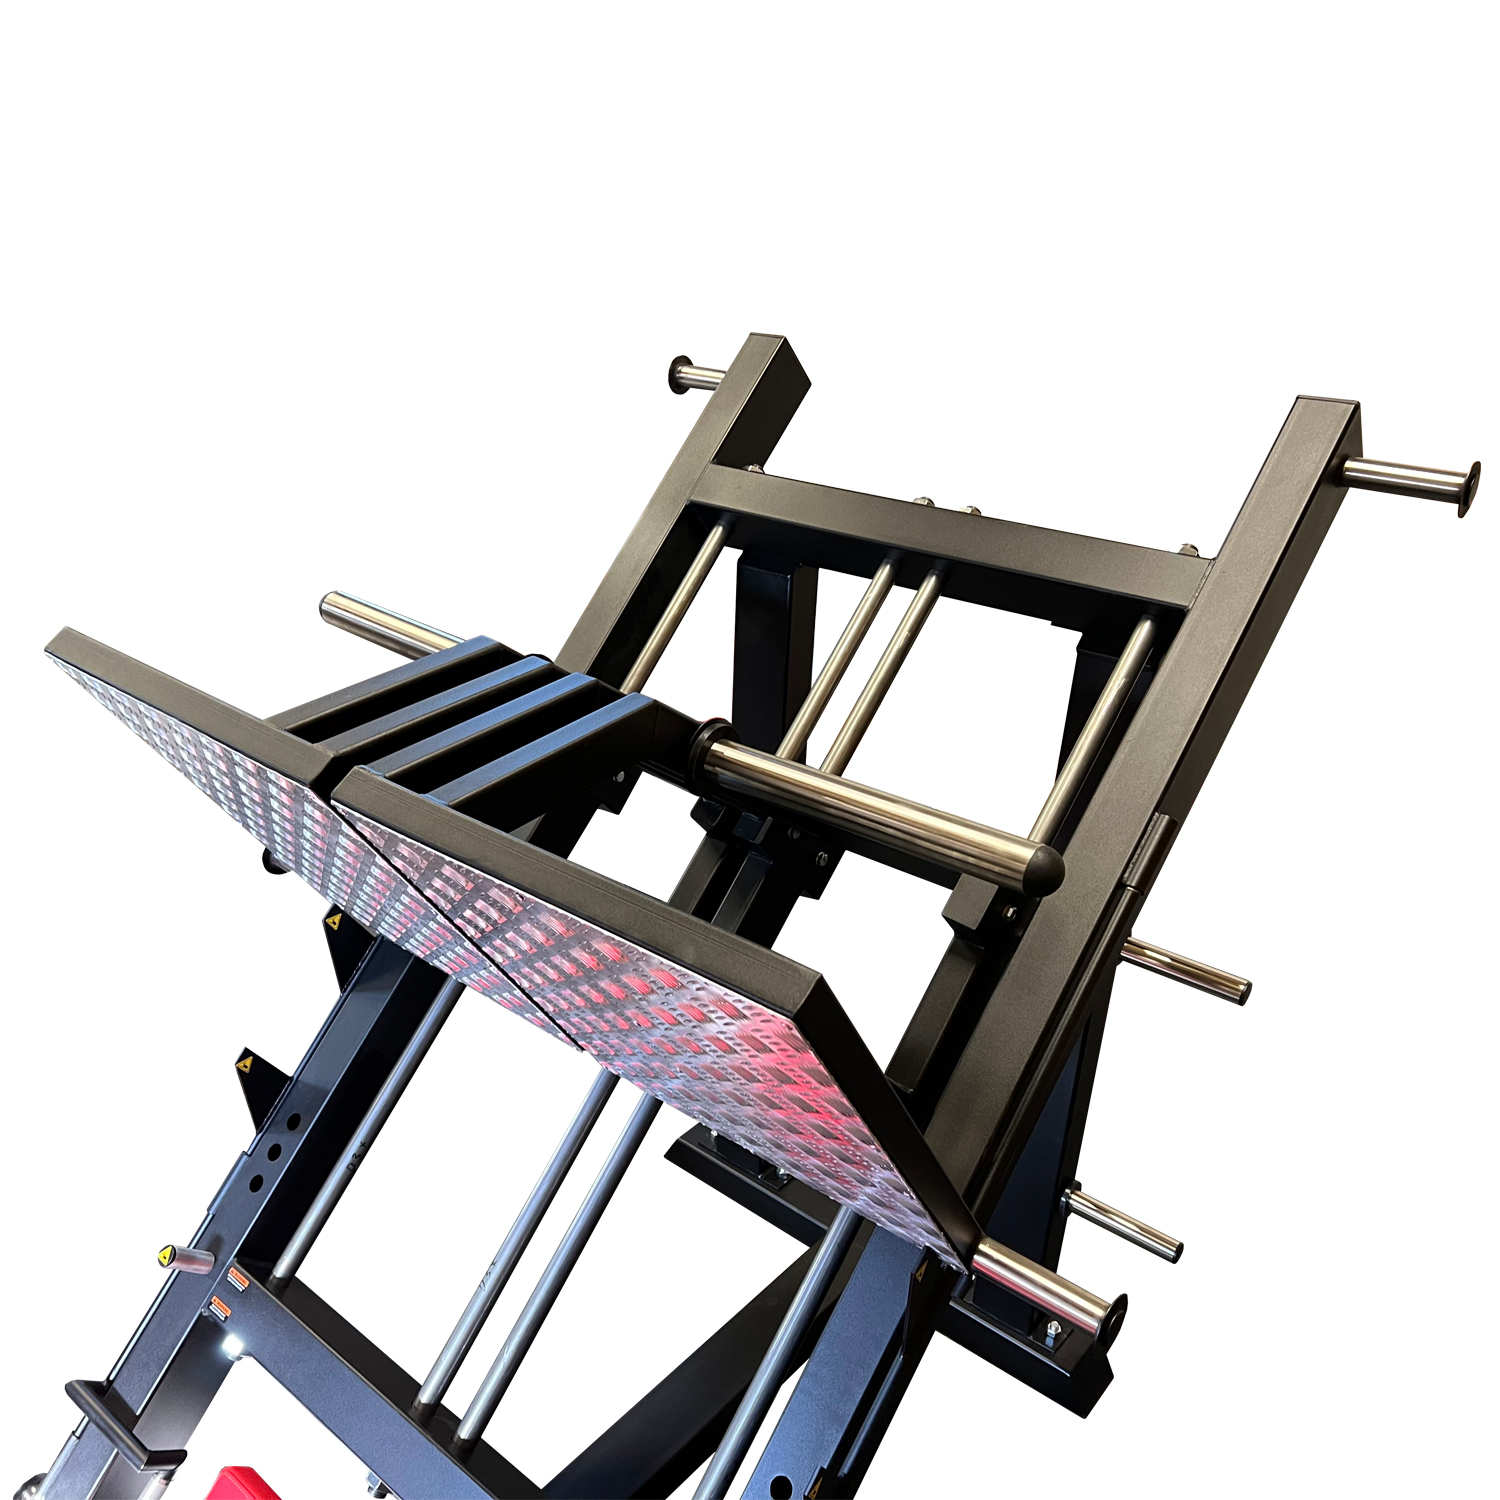 D3X Leg Press Machine  Gym Steel - Professional Gym Equipment